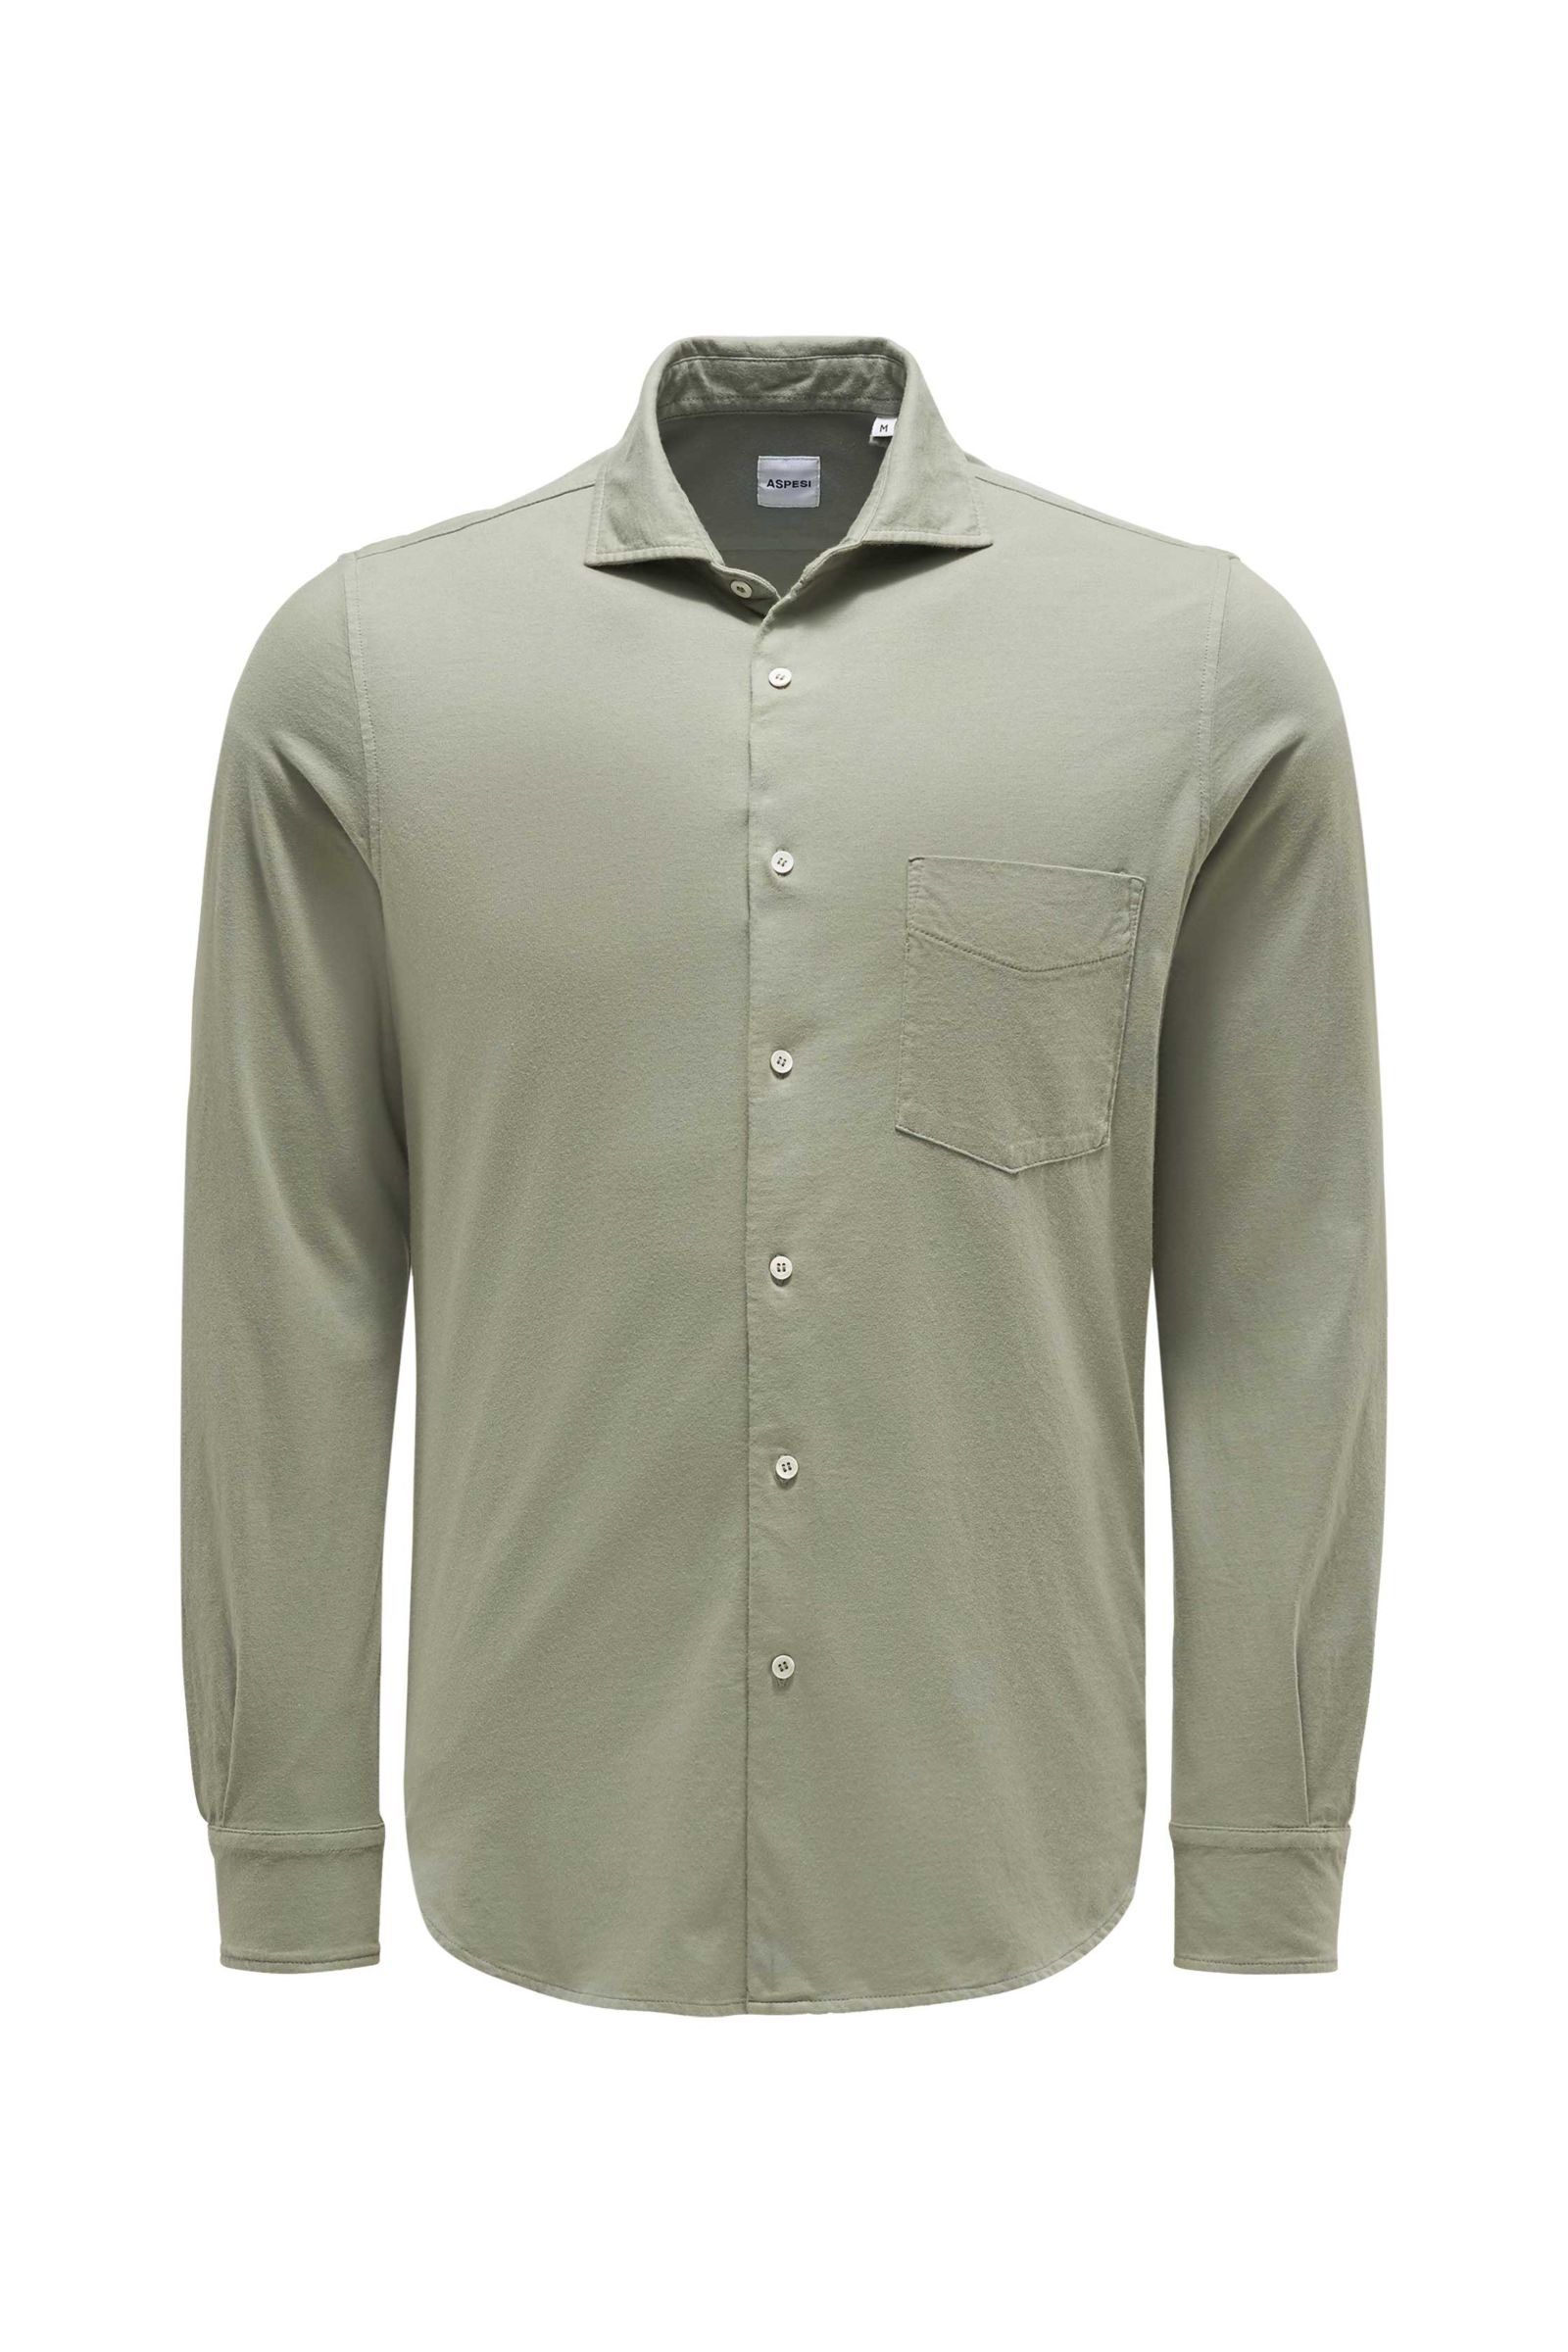 Jersey shirt shark collar grey-green